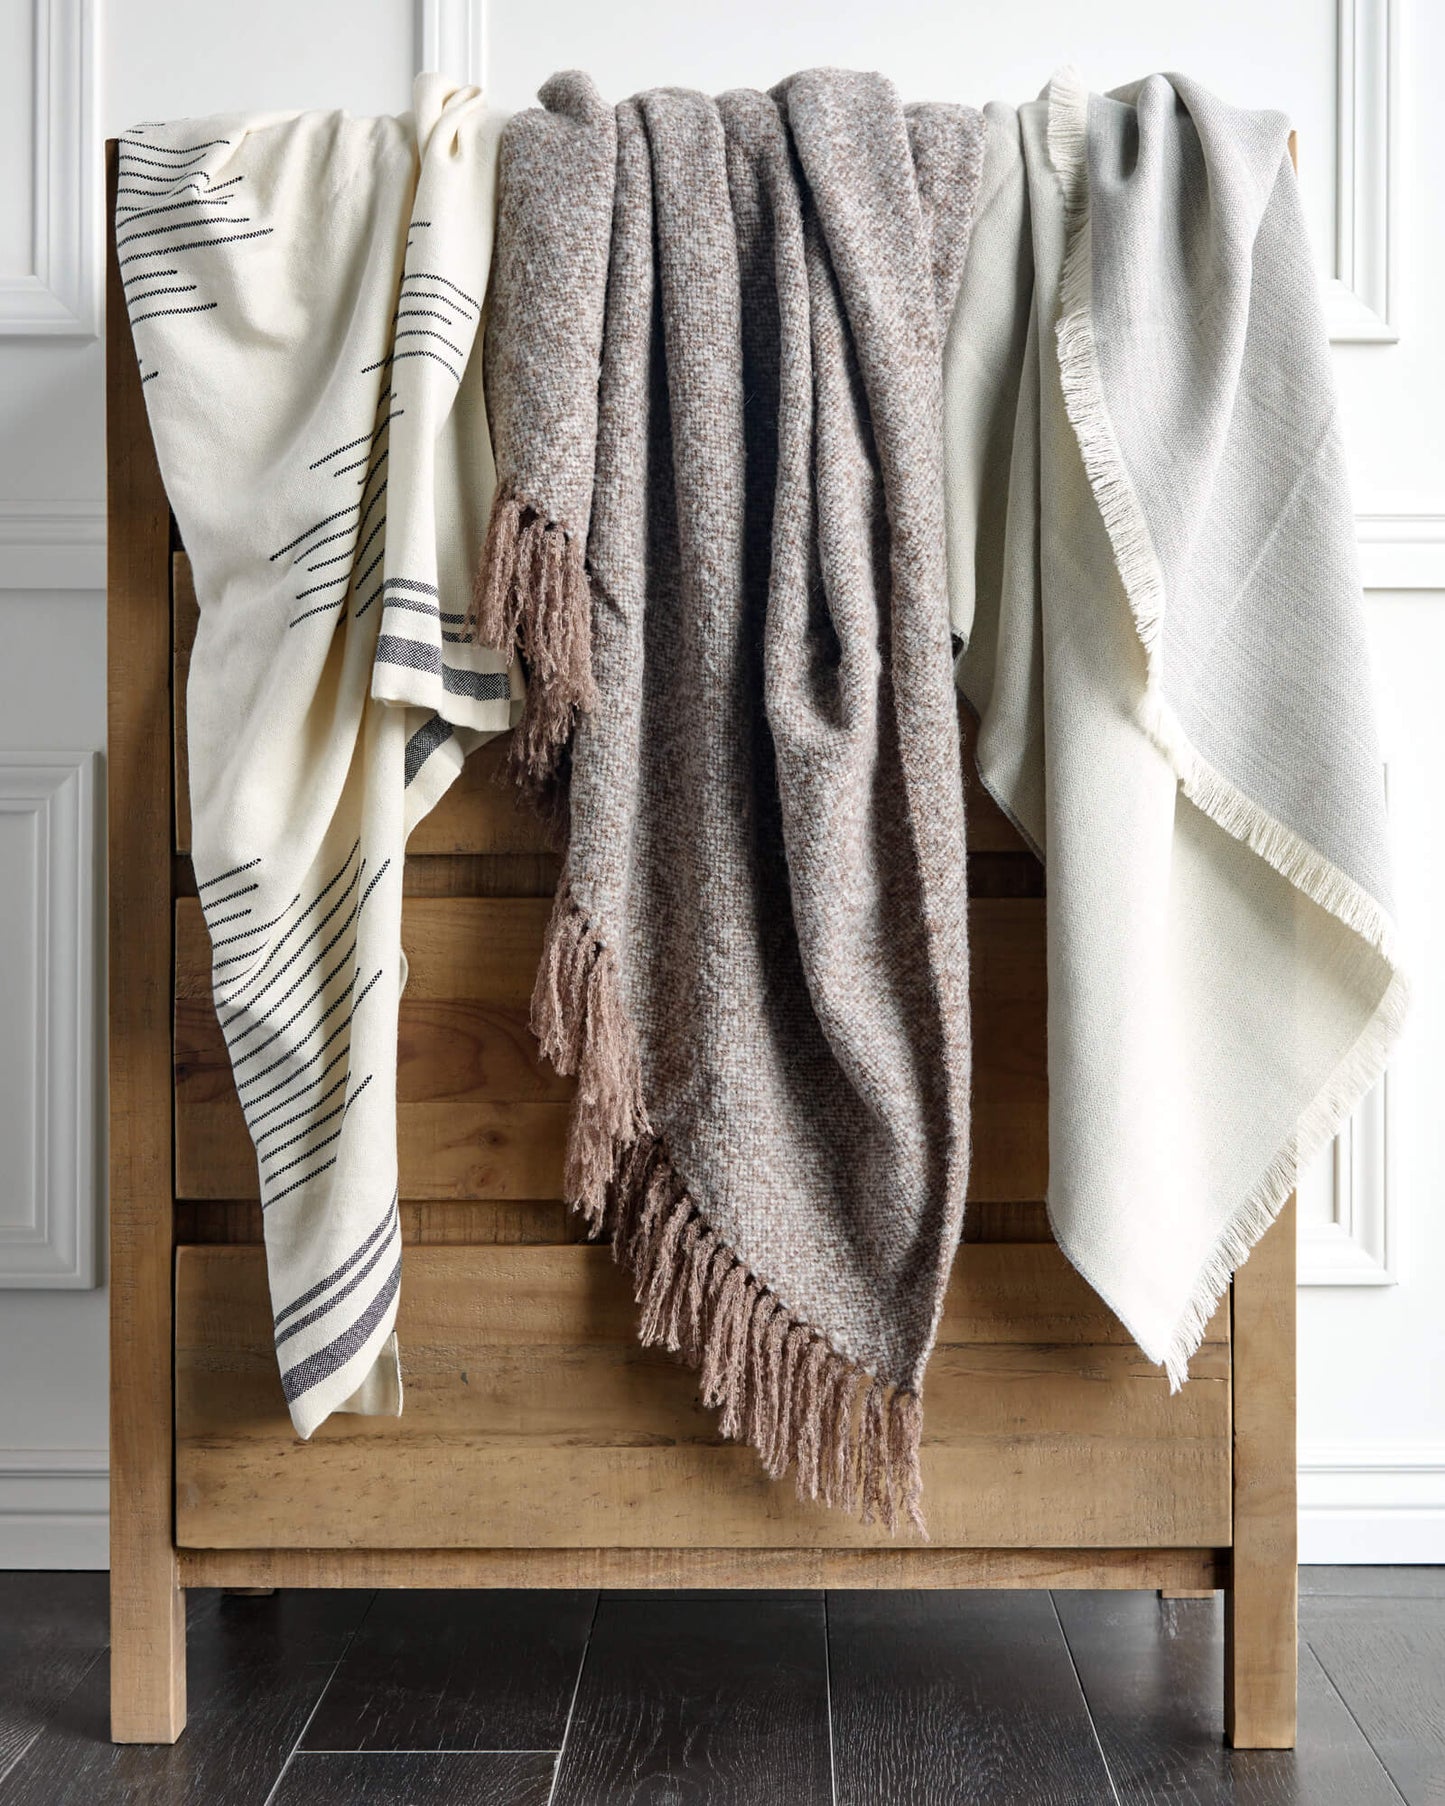 
                  
                    Isleño, La Tierra, and Soñando Alpaca Throw Blankets by Fairkind hanging on dresser.
                  
                